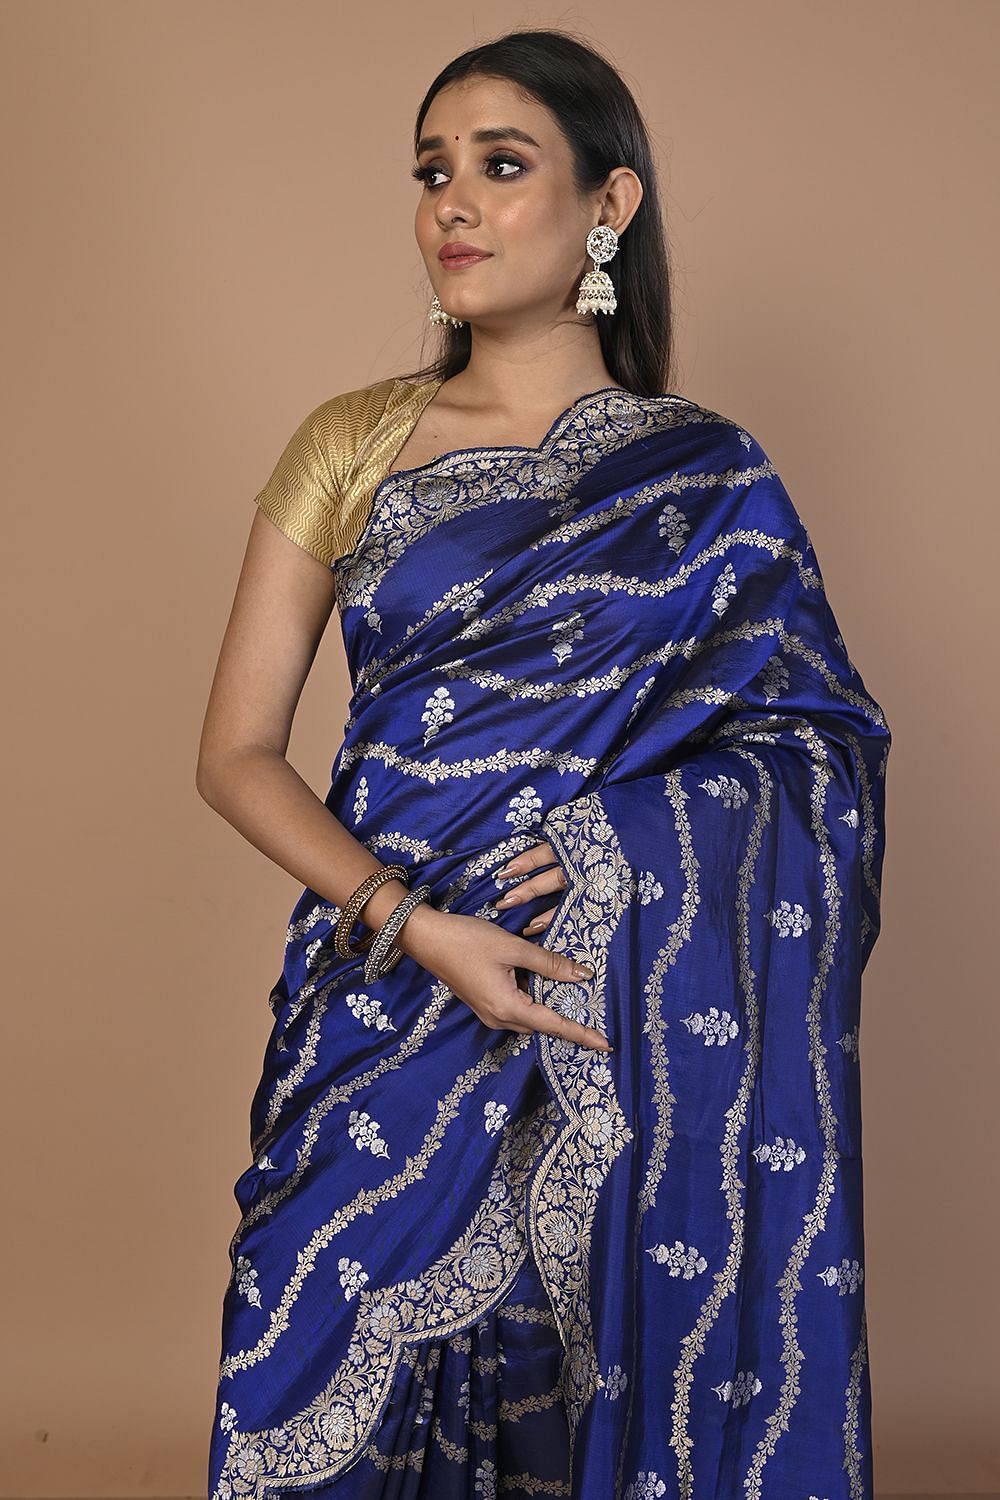 Designer Minakari Banarasi Silk Saree (adi61463)